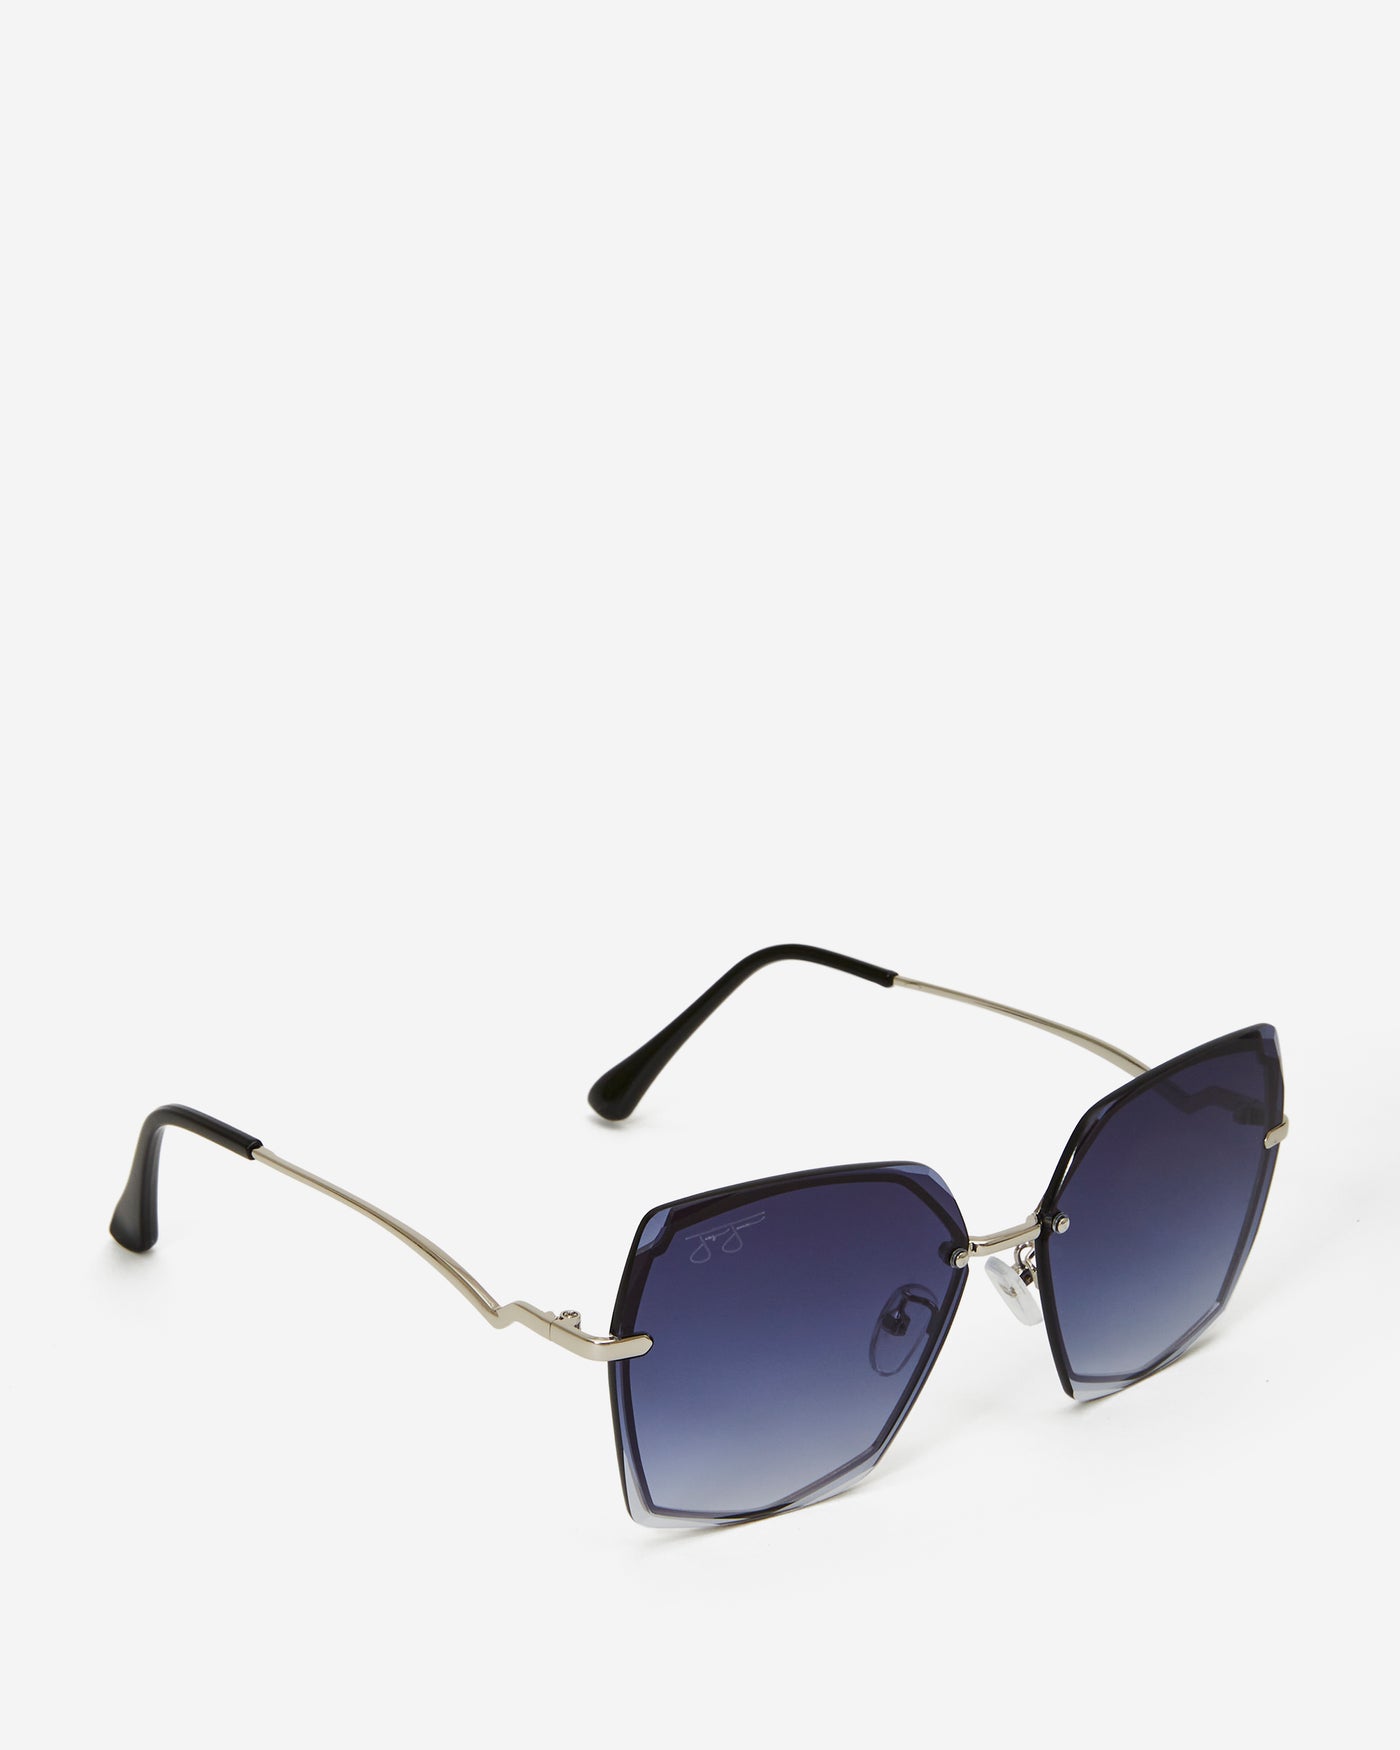 Hexagonal Metal Frame Sunglasses - Black Frame with Blue Smoke Lens Sunglasses Joey James, The Label   